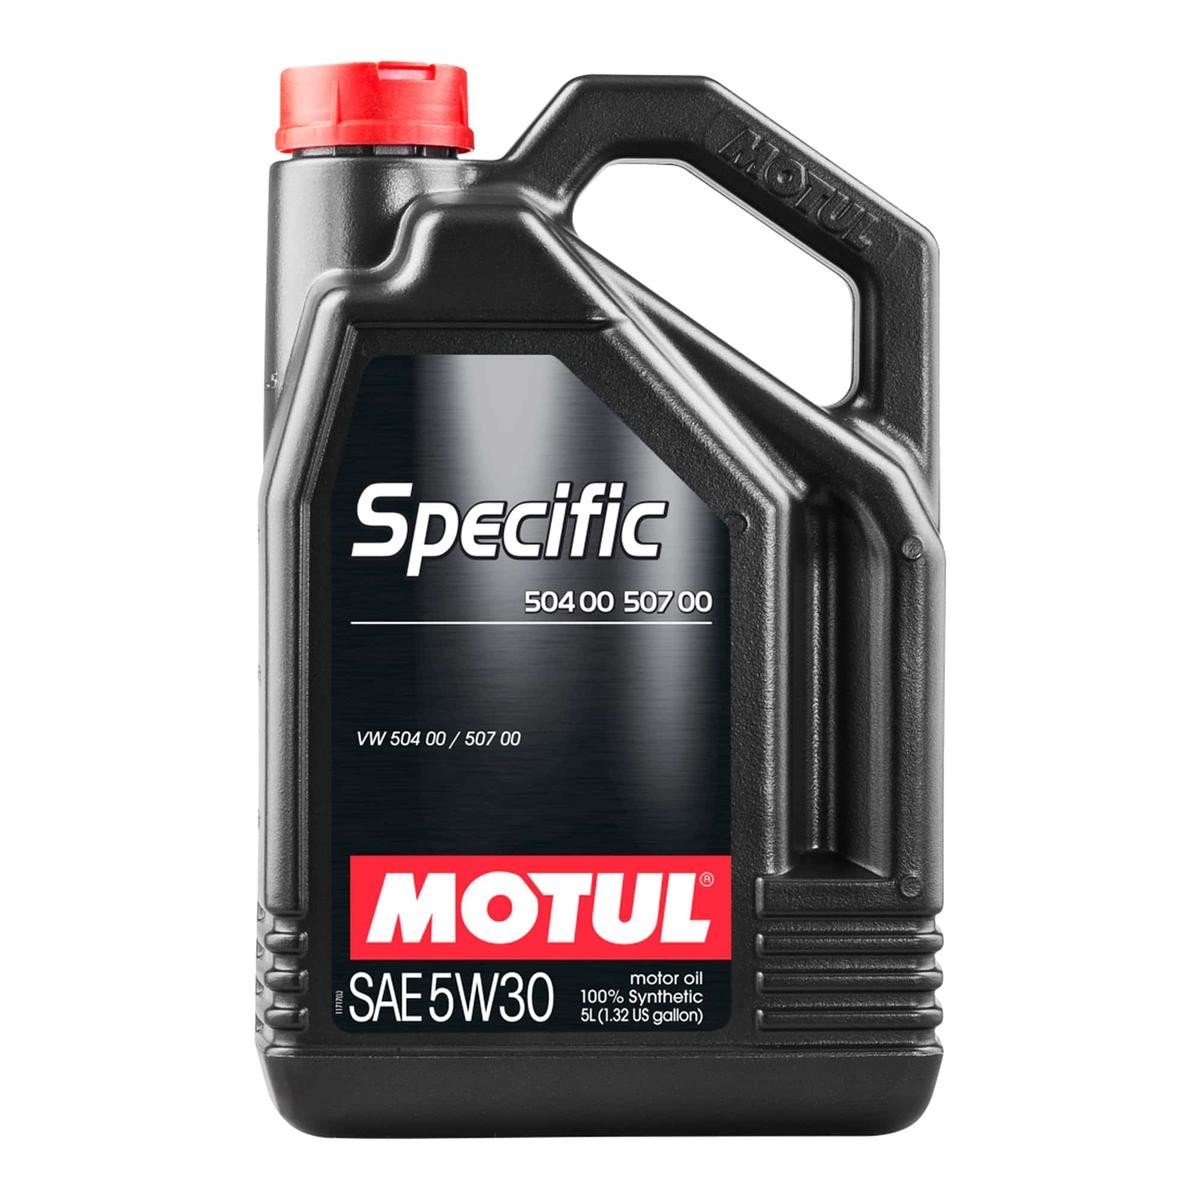 Comprar Aceite motor MOTUL 106375 SPECIFIC, 504 00 507 00 5W-30, 5L